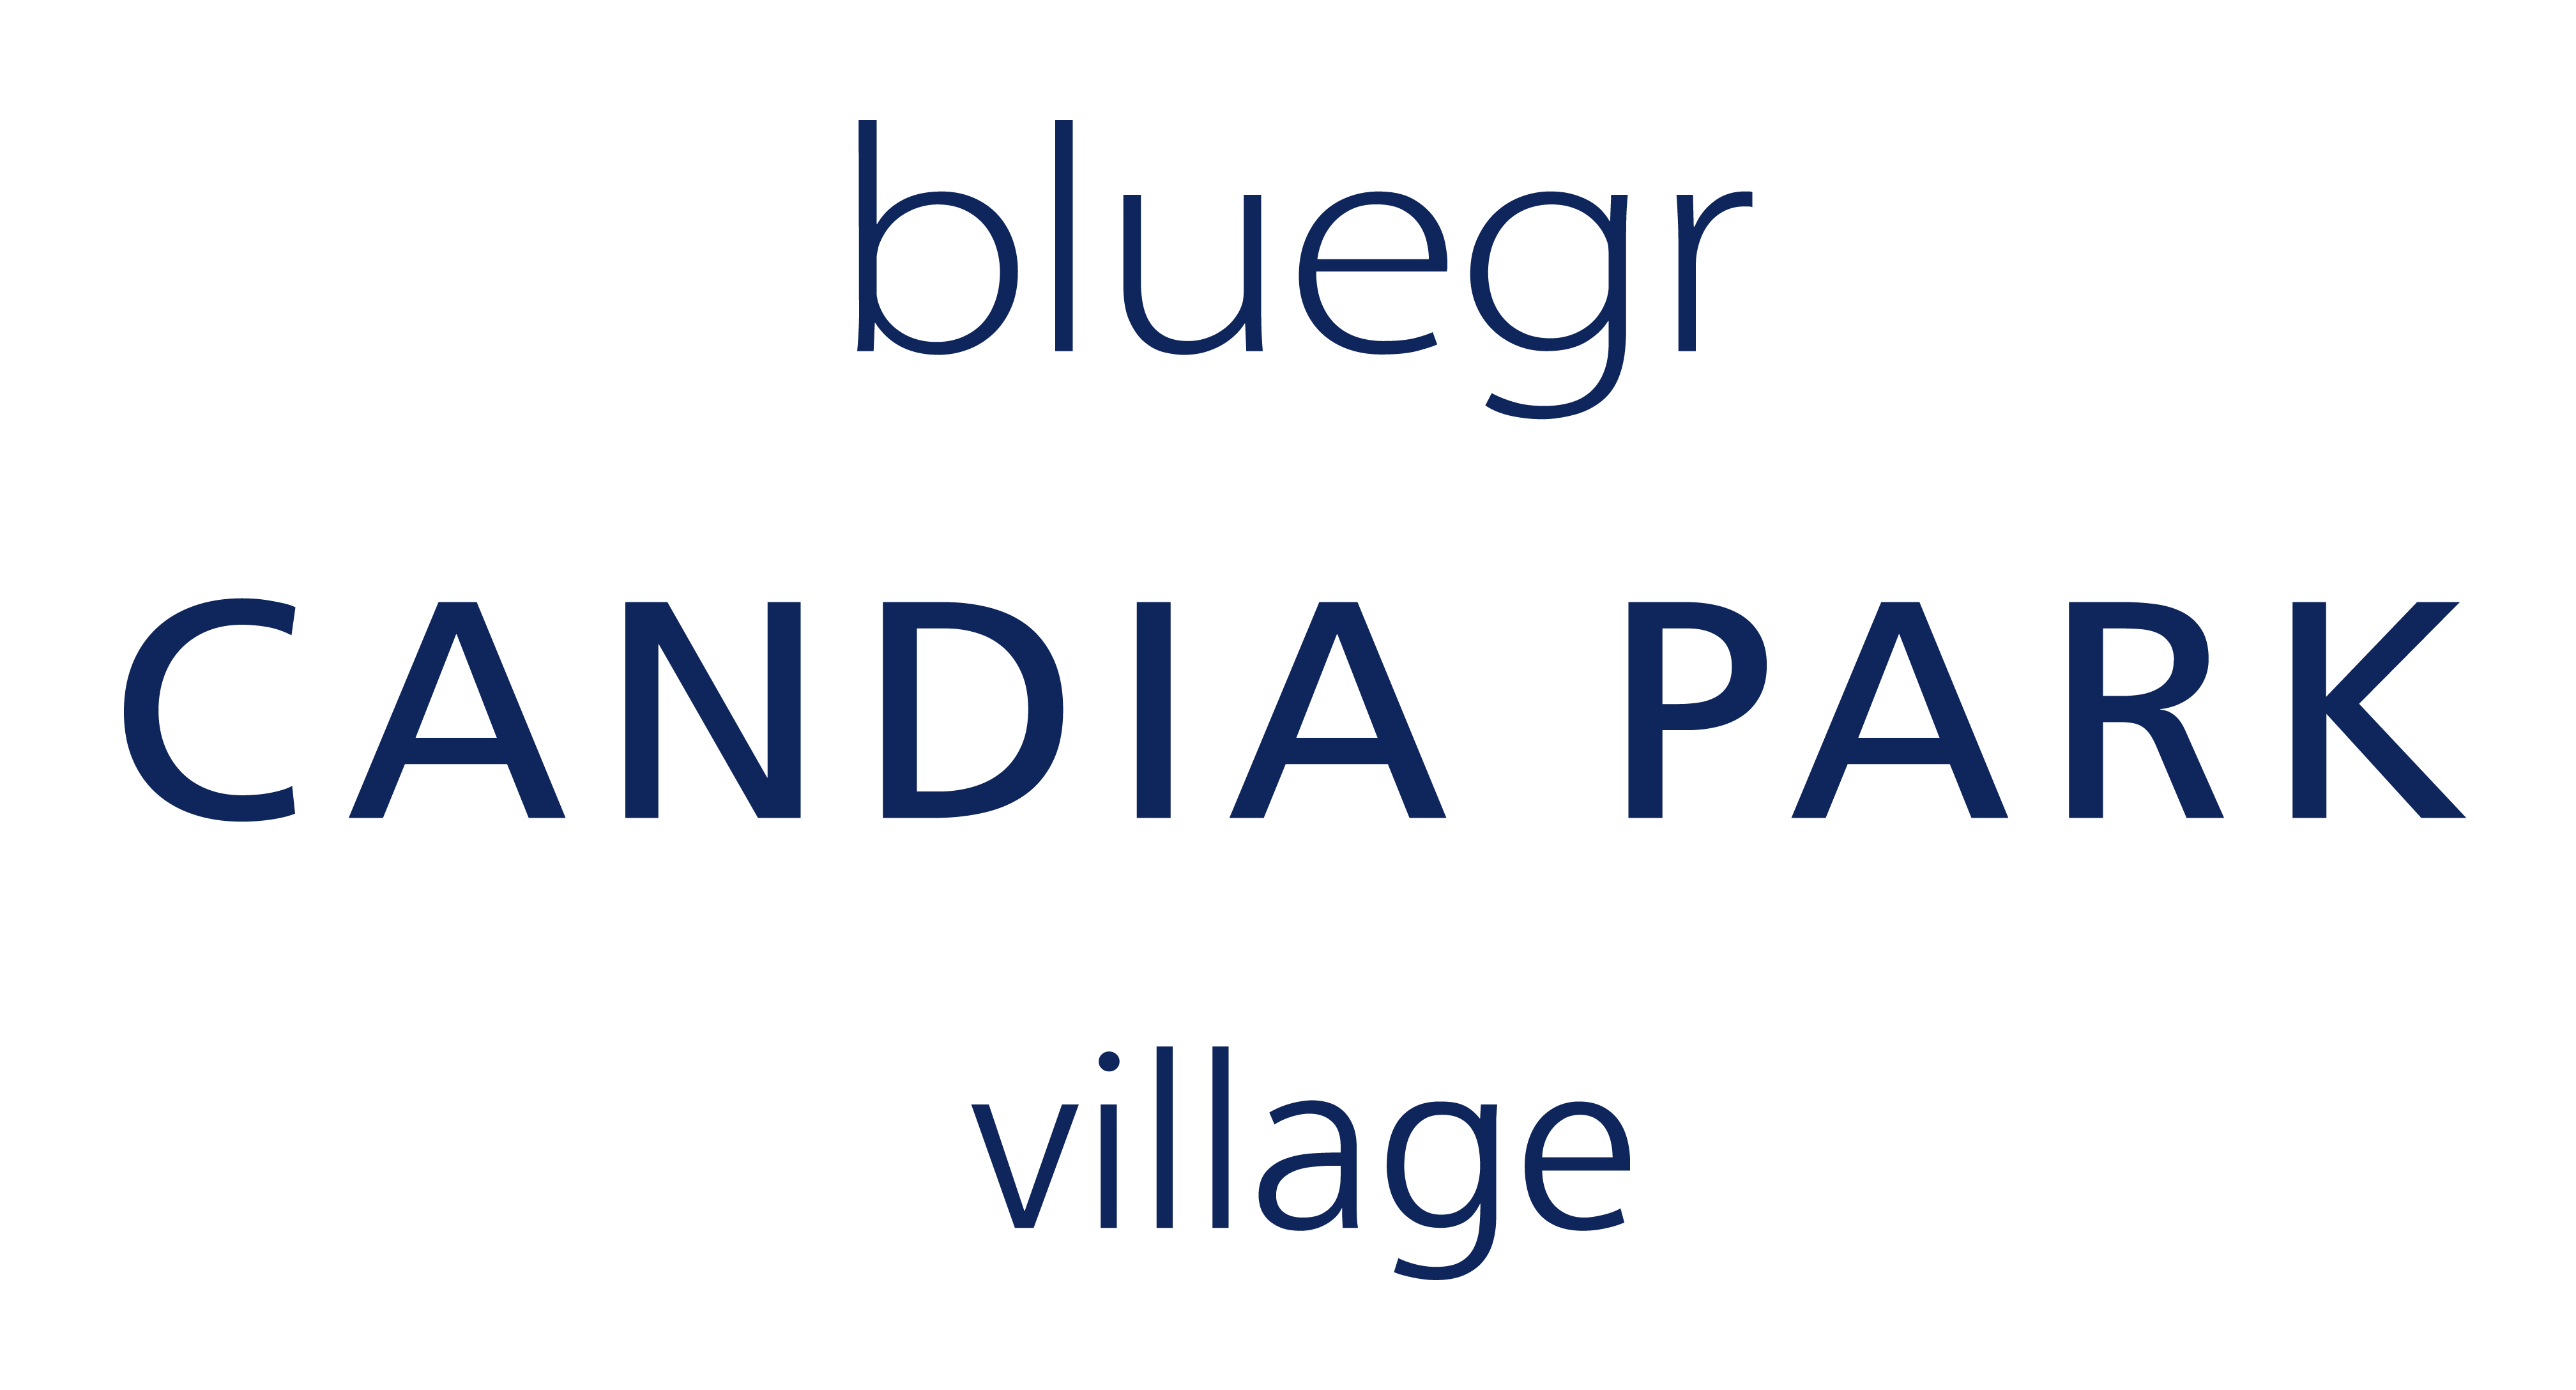 Candia Park Village logo